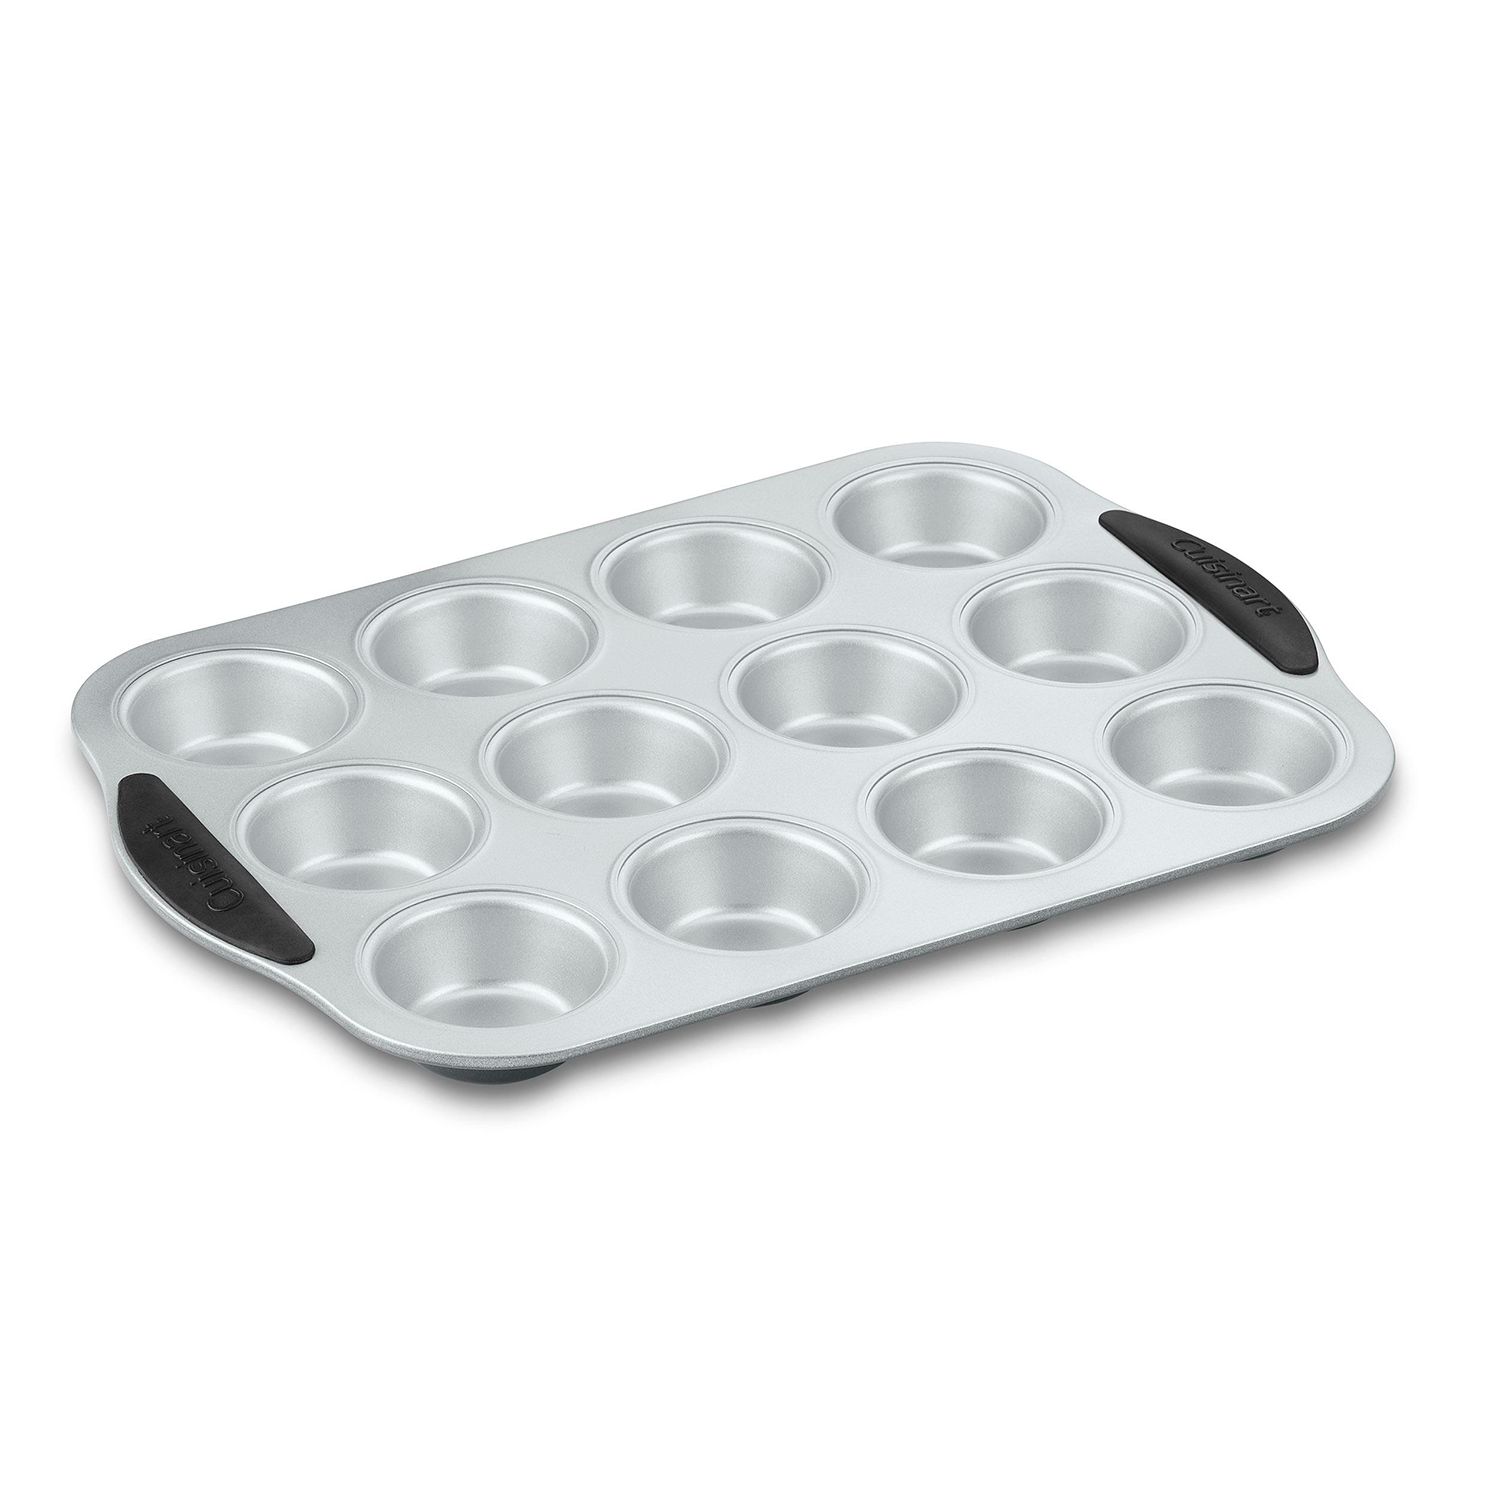  Farberware Nonstick Bakeware 12-Cup Muffin Tin / Nonstick 12-Cup  Cupcake Tin - 12 Cup, Gray